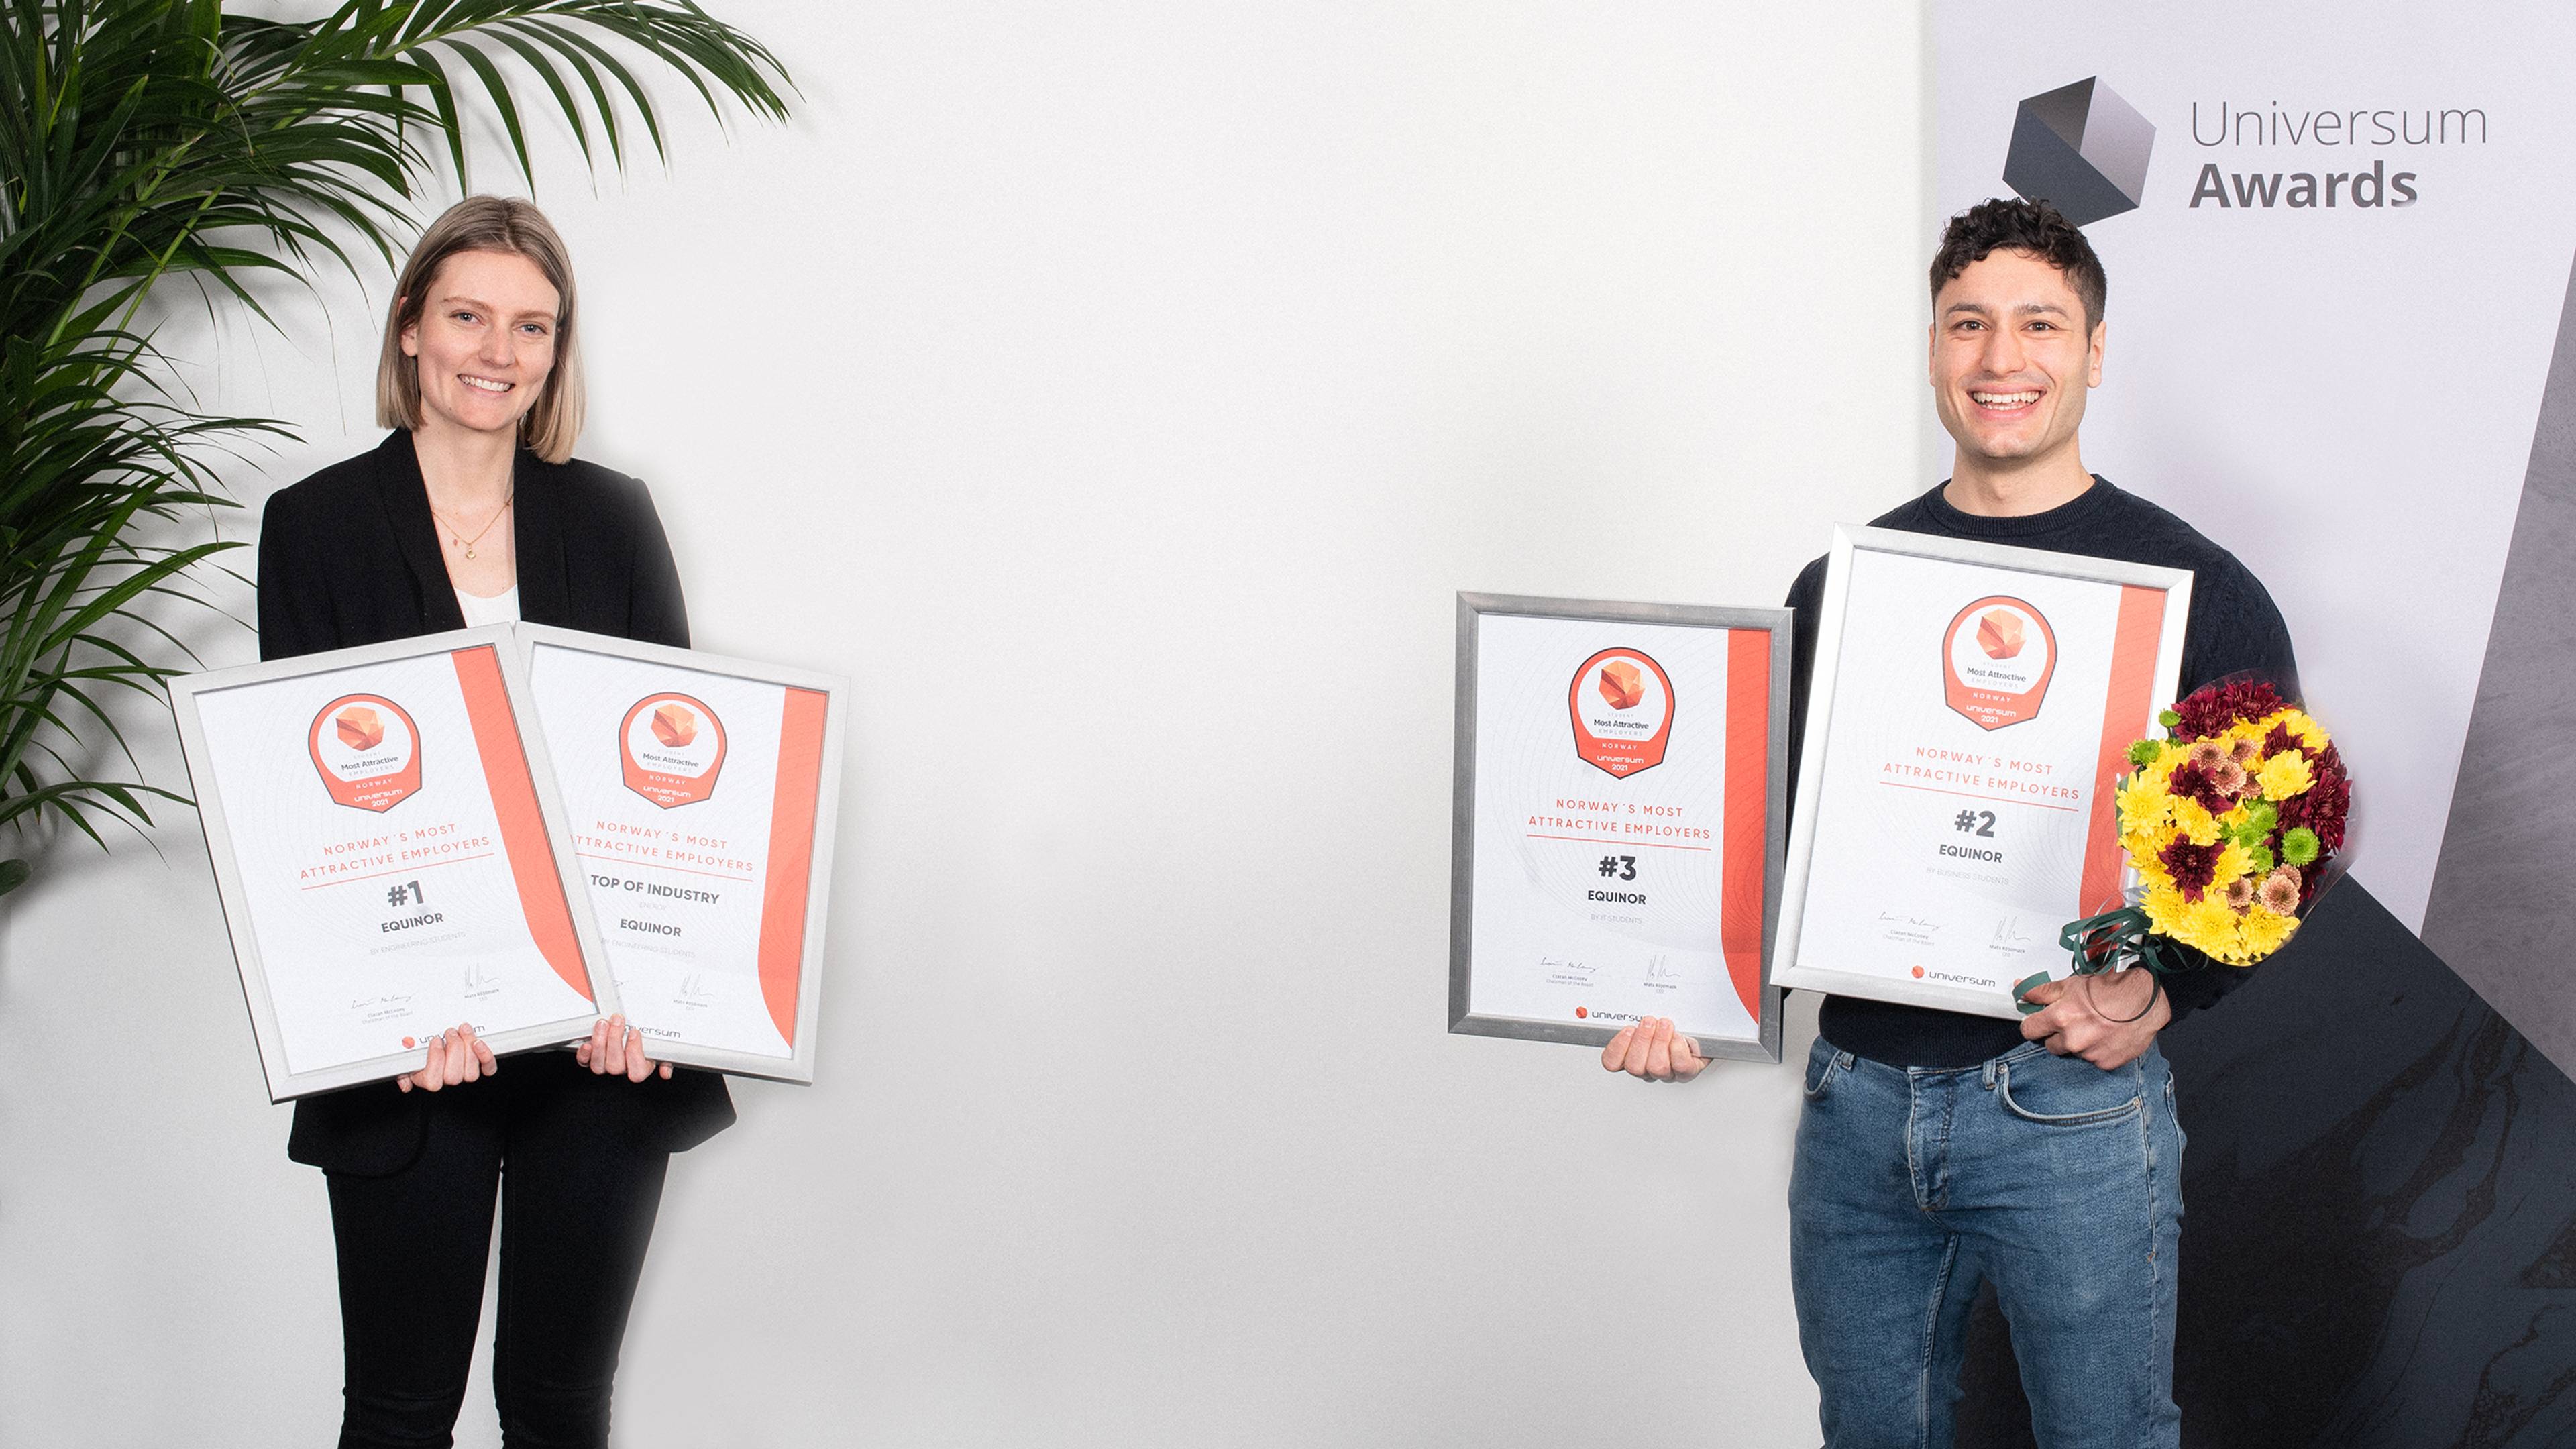 Tamara Solaja & Daniel Sander Isaksen receiving the Universum award.